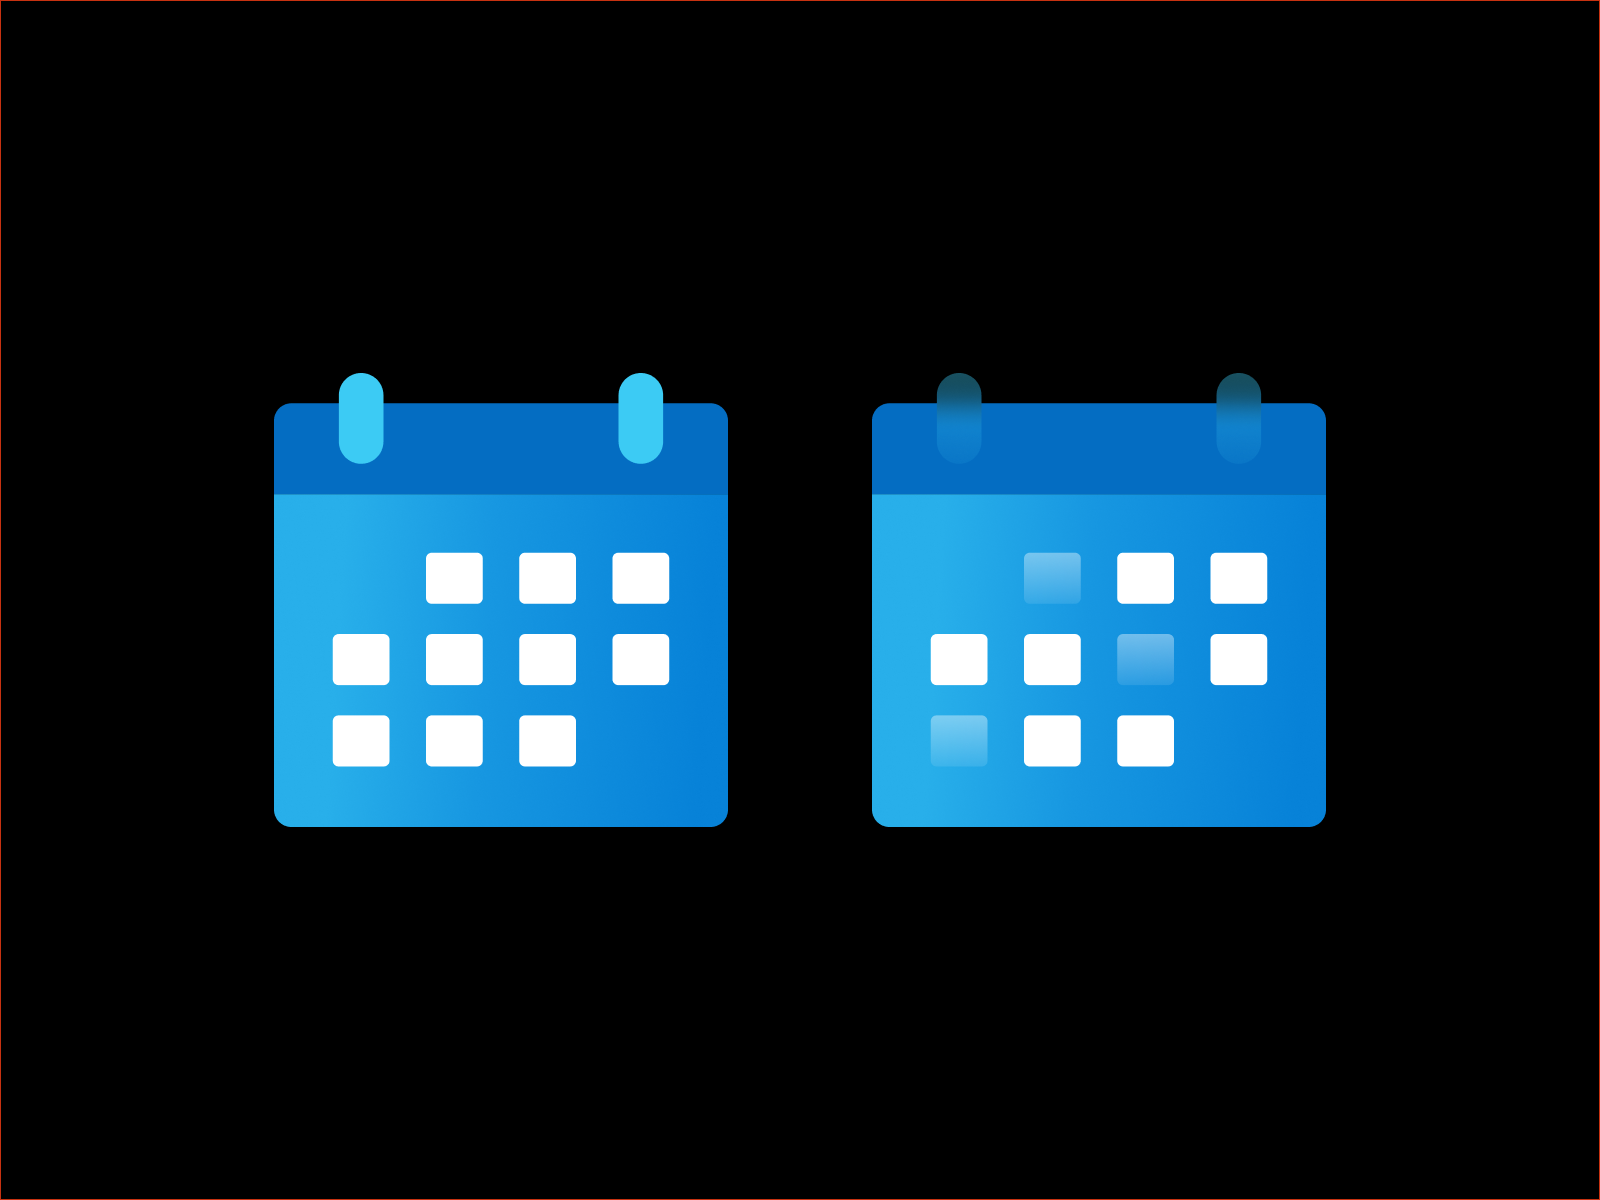 Microsoft Calendar Icons by Srivathson Thyagarajan on Dribbble